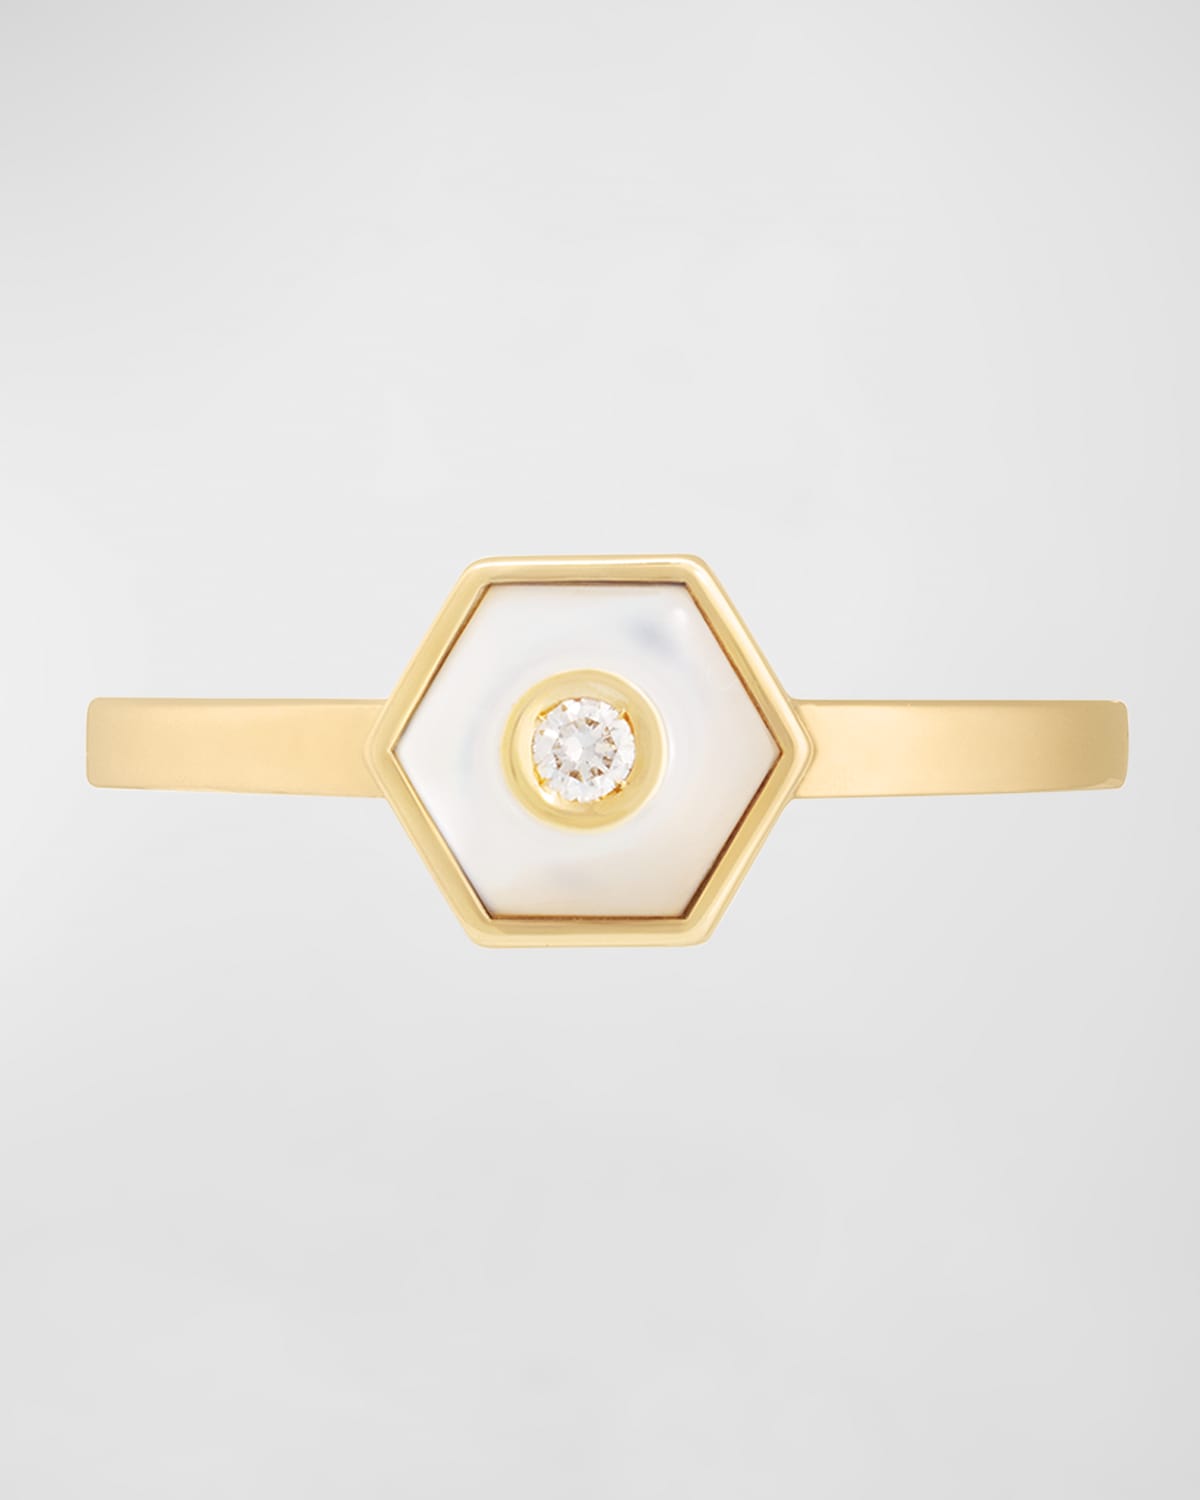 Baia Sommersa 18K Yellow Gold Ring with White Diamond and Lapis